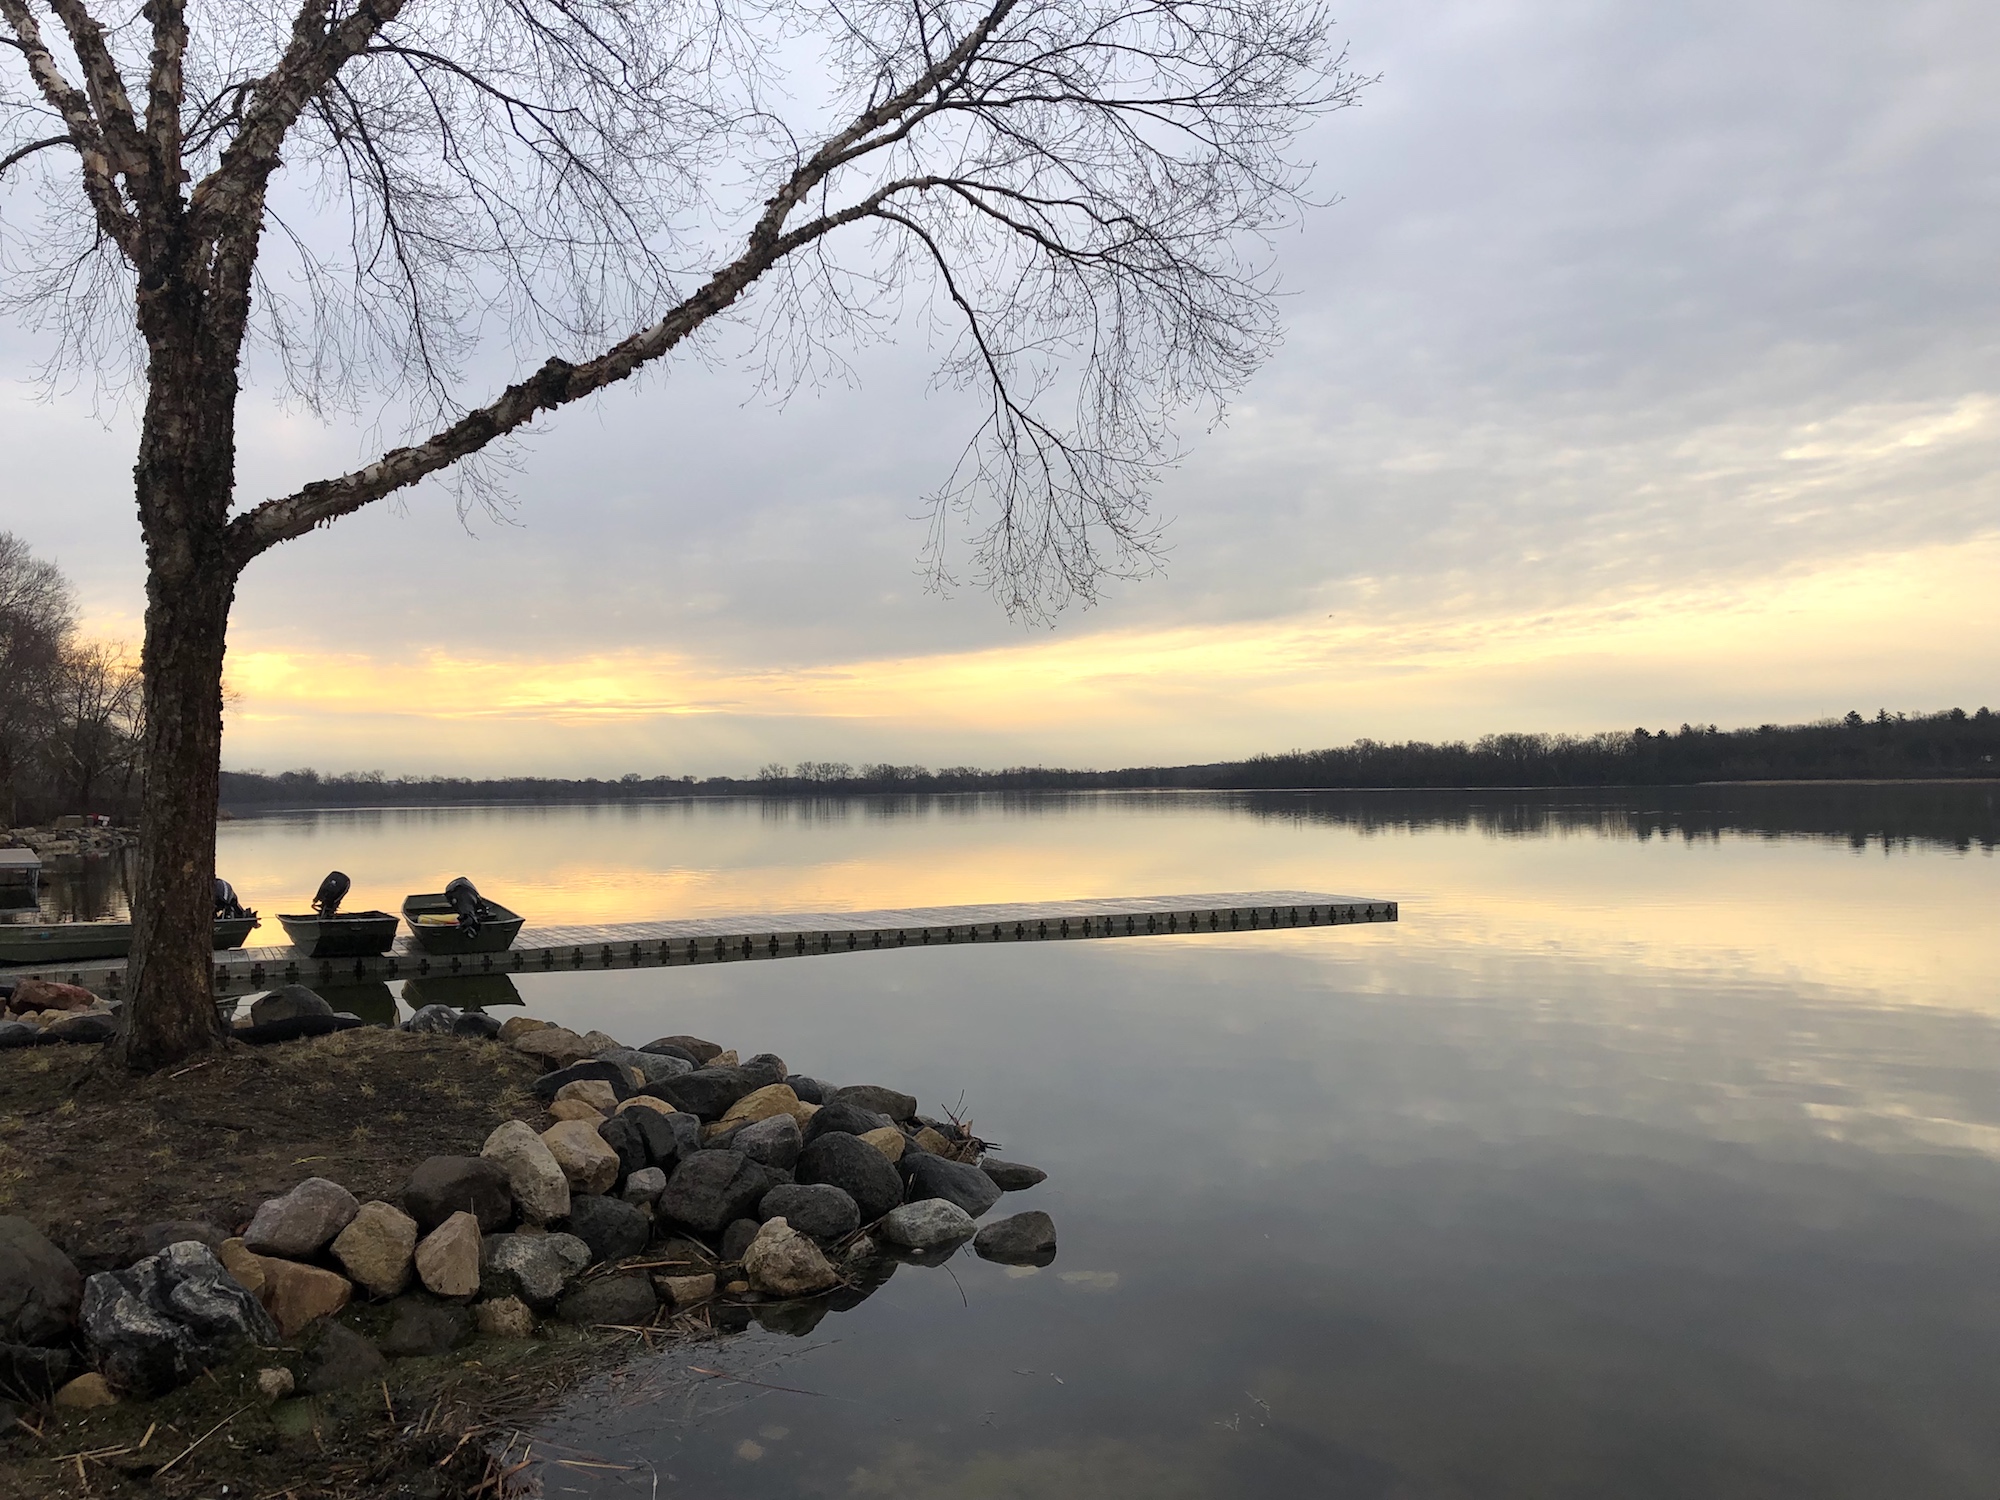 Lake Wingra on April 16, 2019.